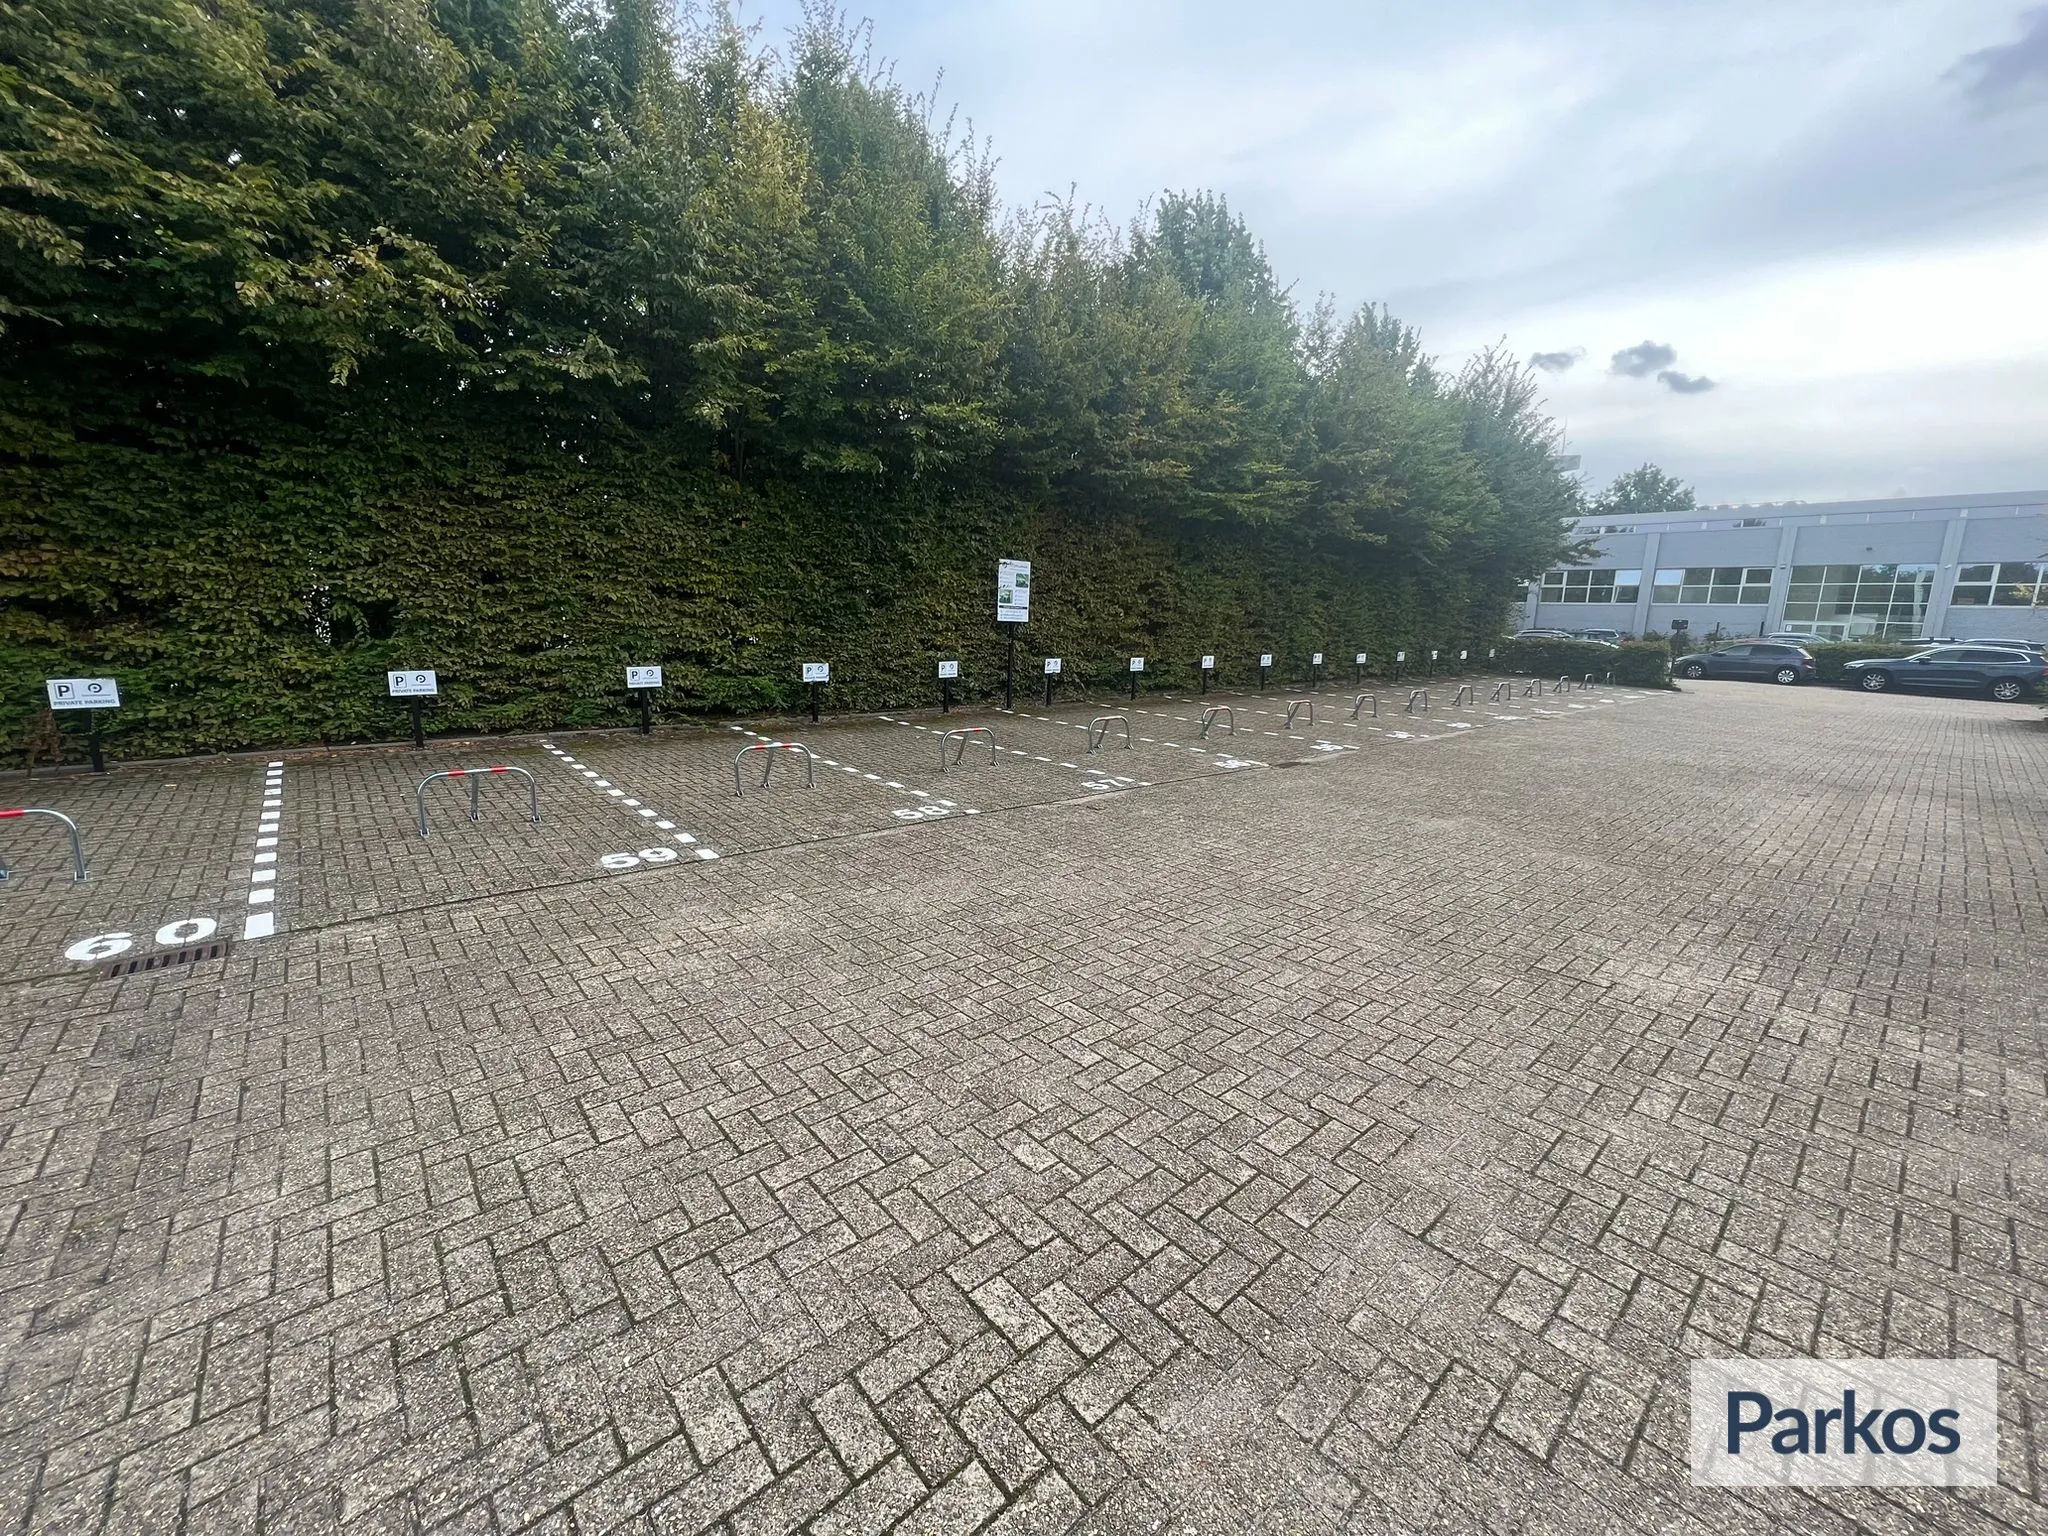 OM PARKING ZAVENTEM - Parking Brussels Airport - picture 1